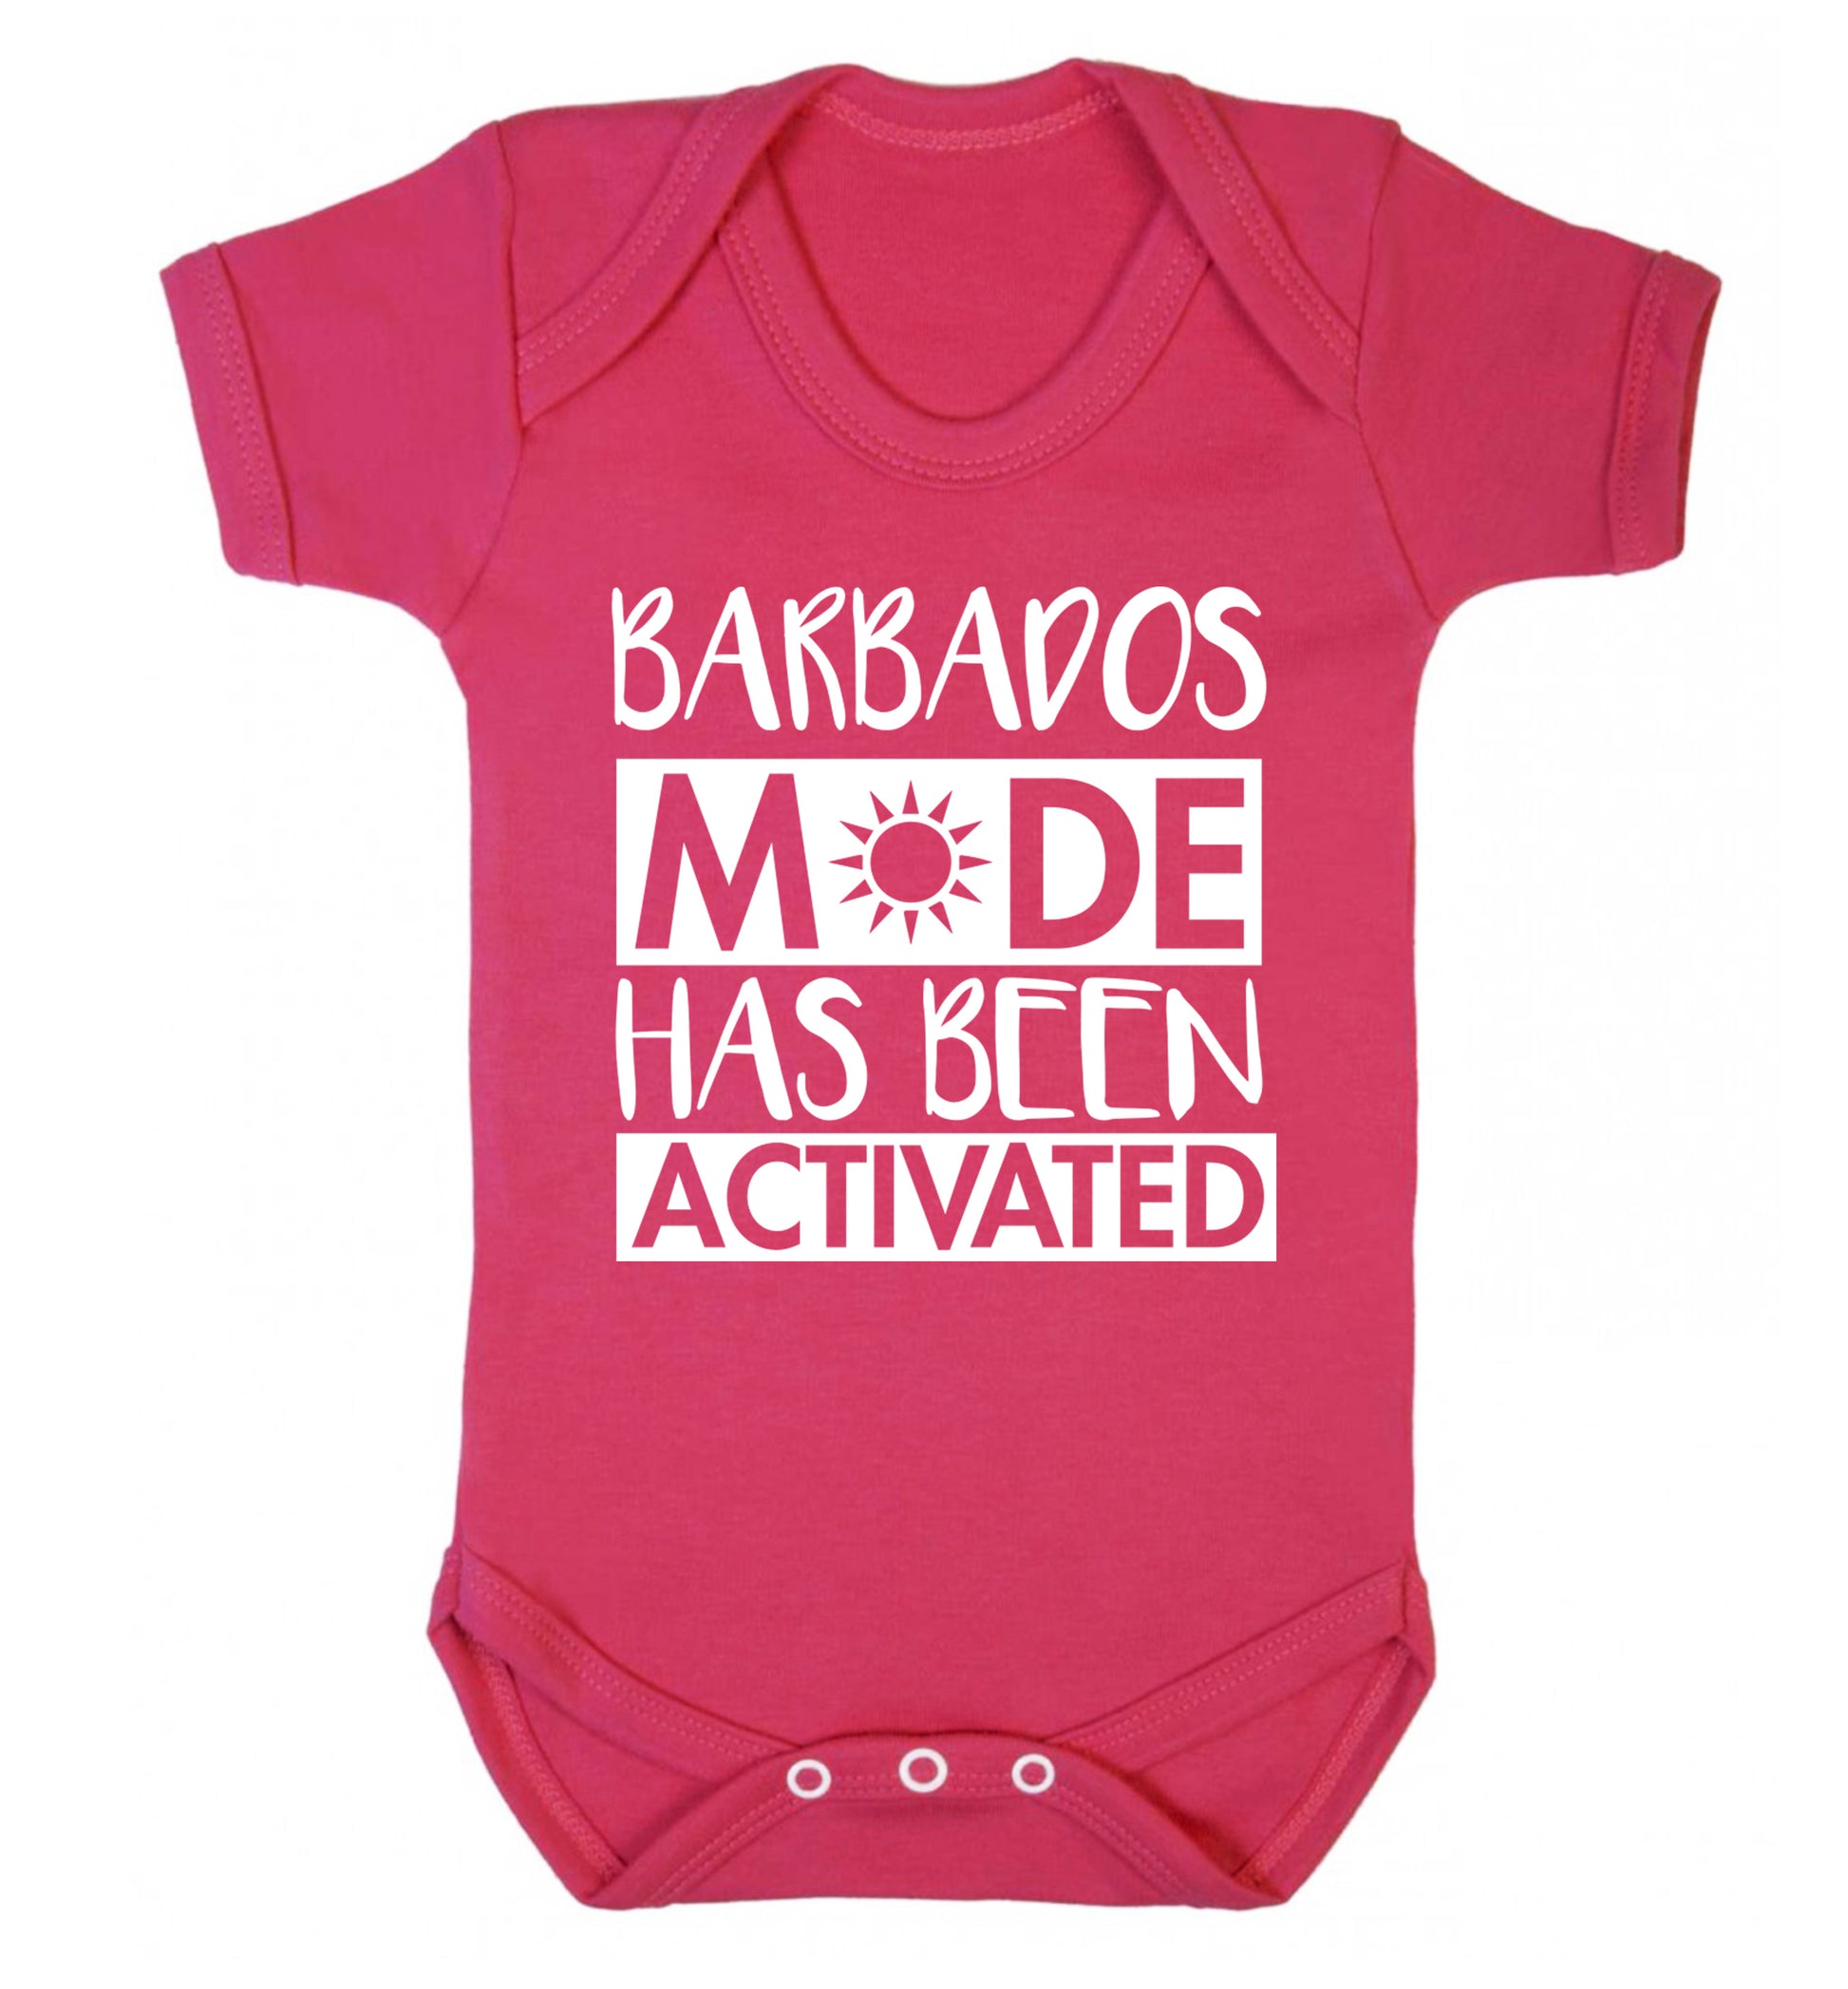 Barbados mode has been activated Baby Vest dark pink 18-24 months